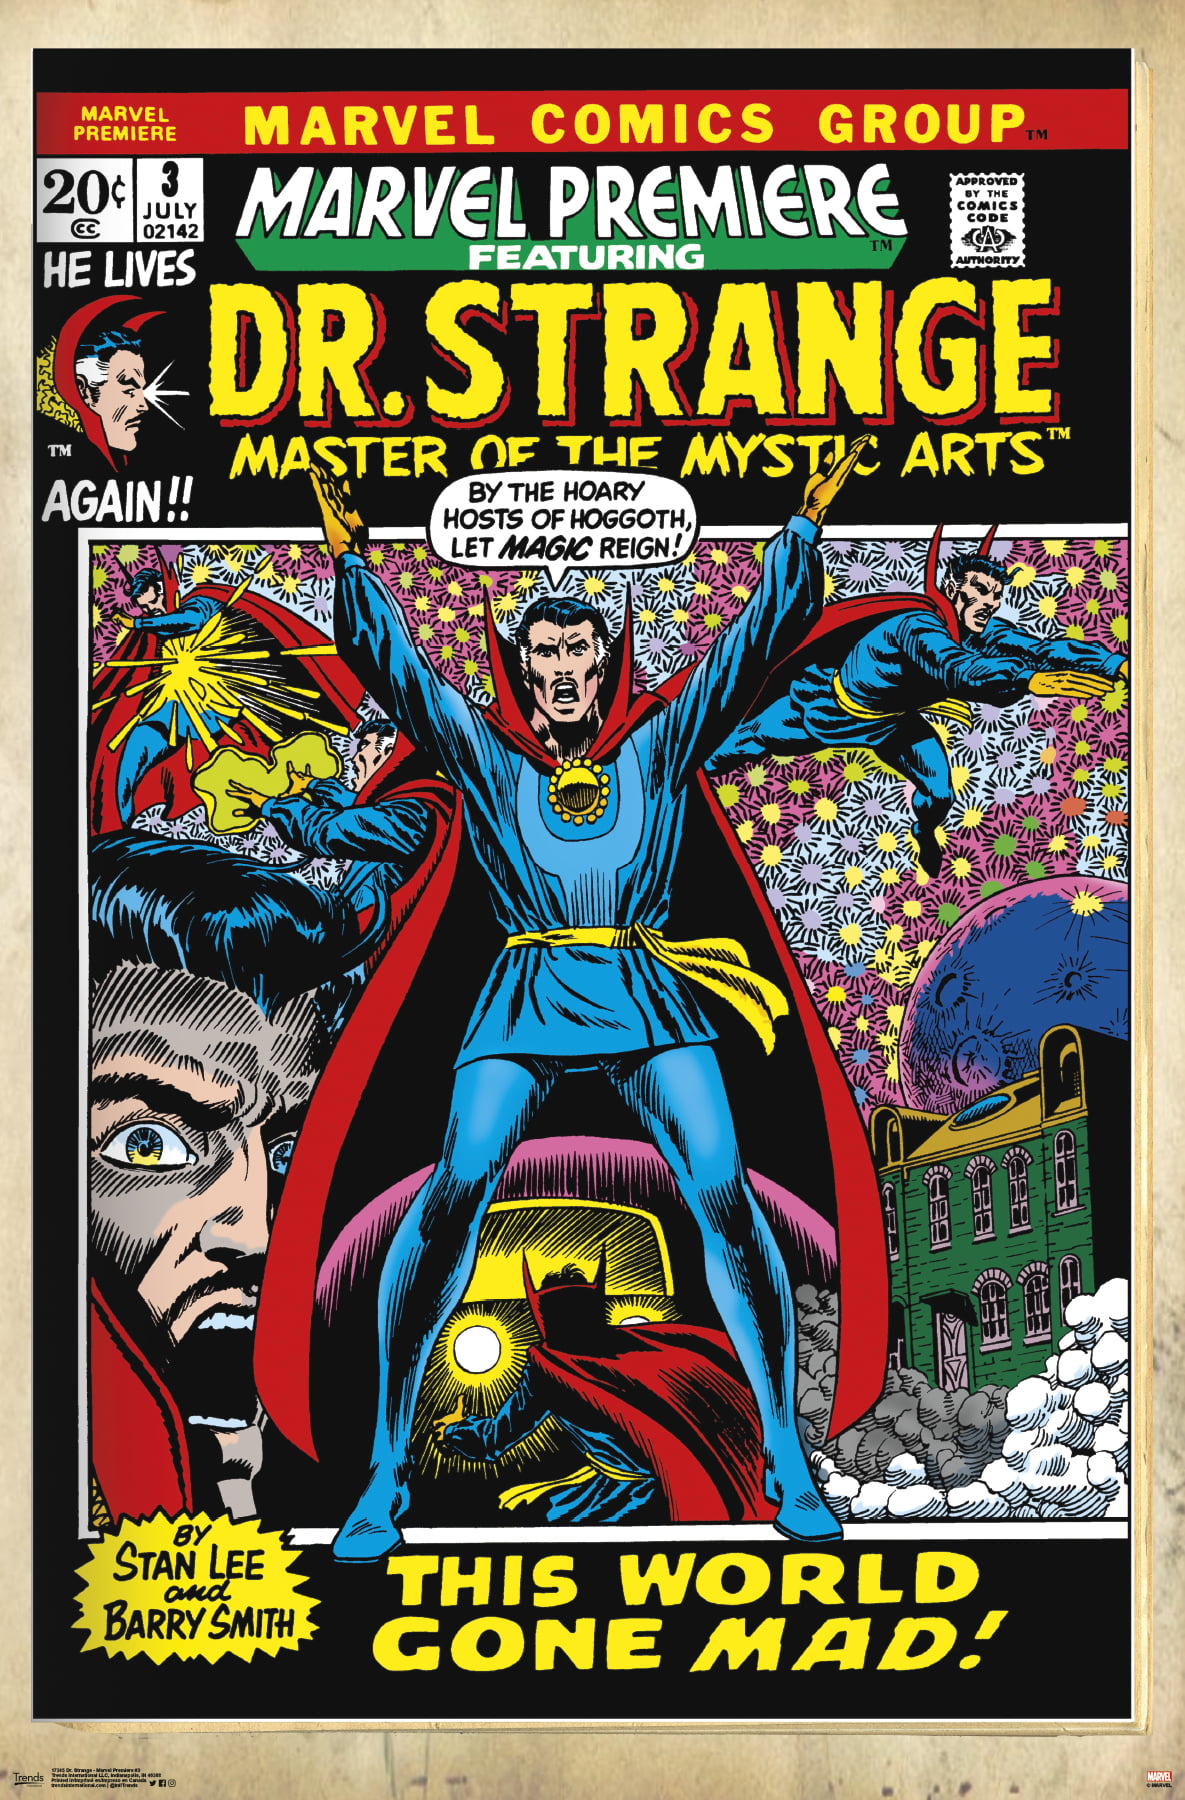 Marvel Premiere Cover #3 Poster Doctor Strange Marvel Comics 